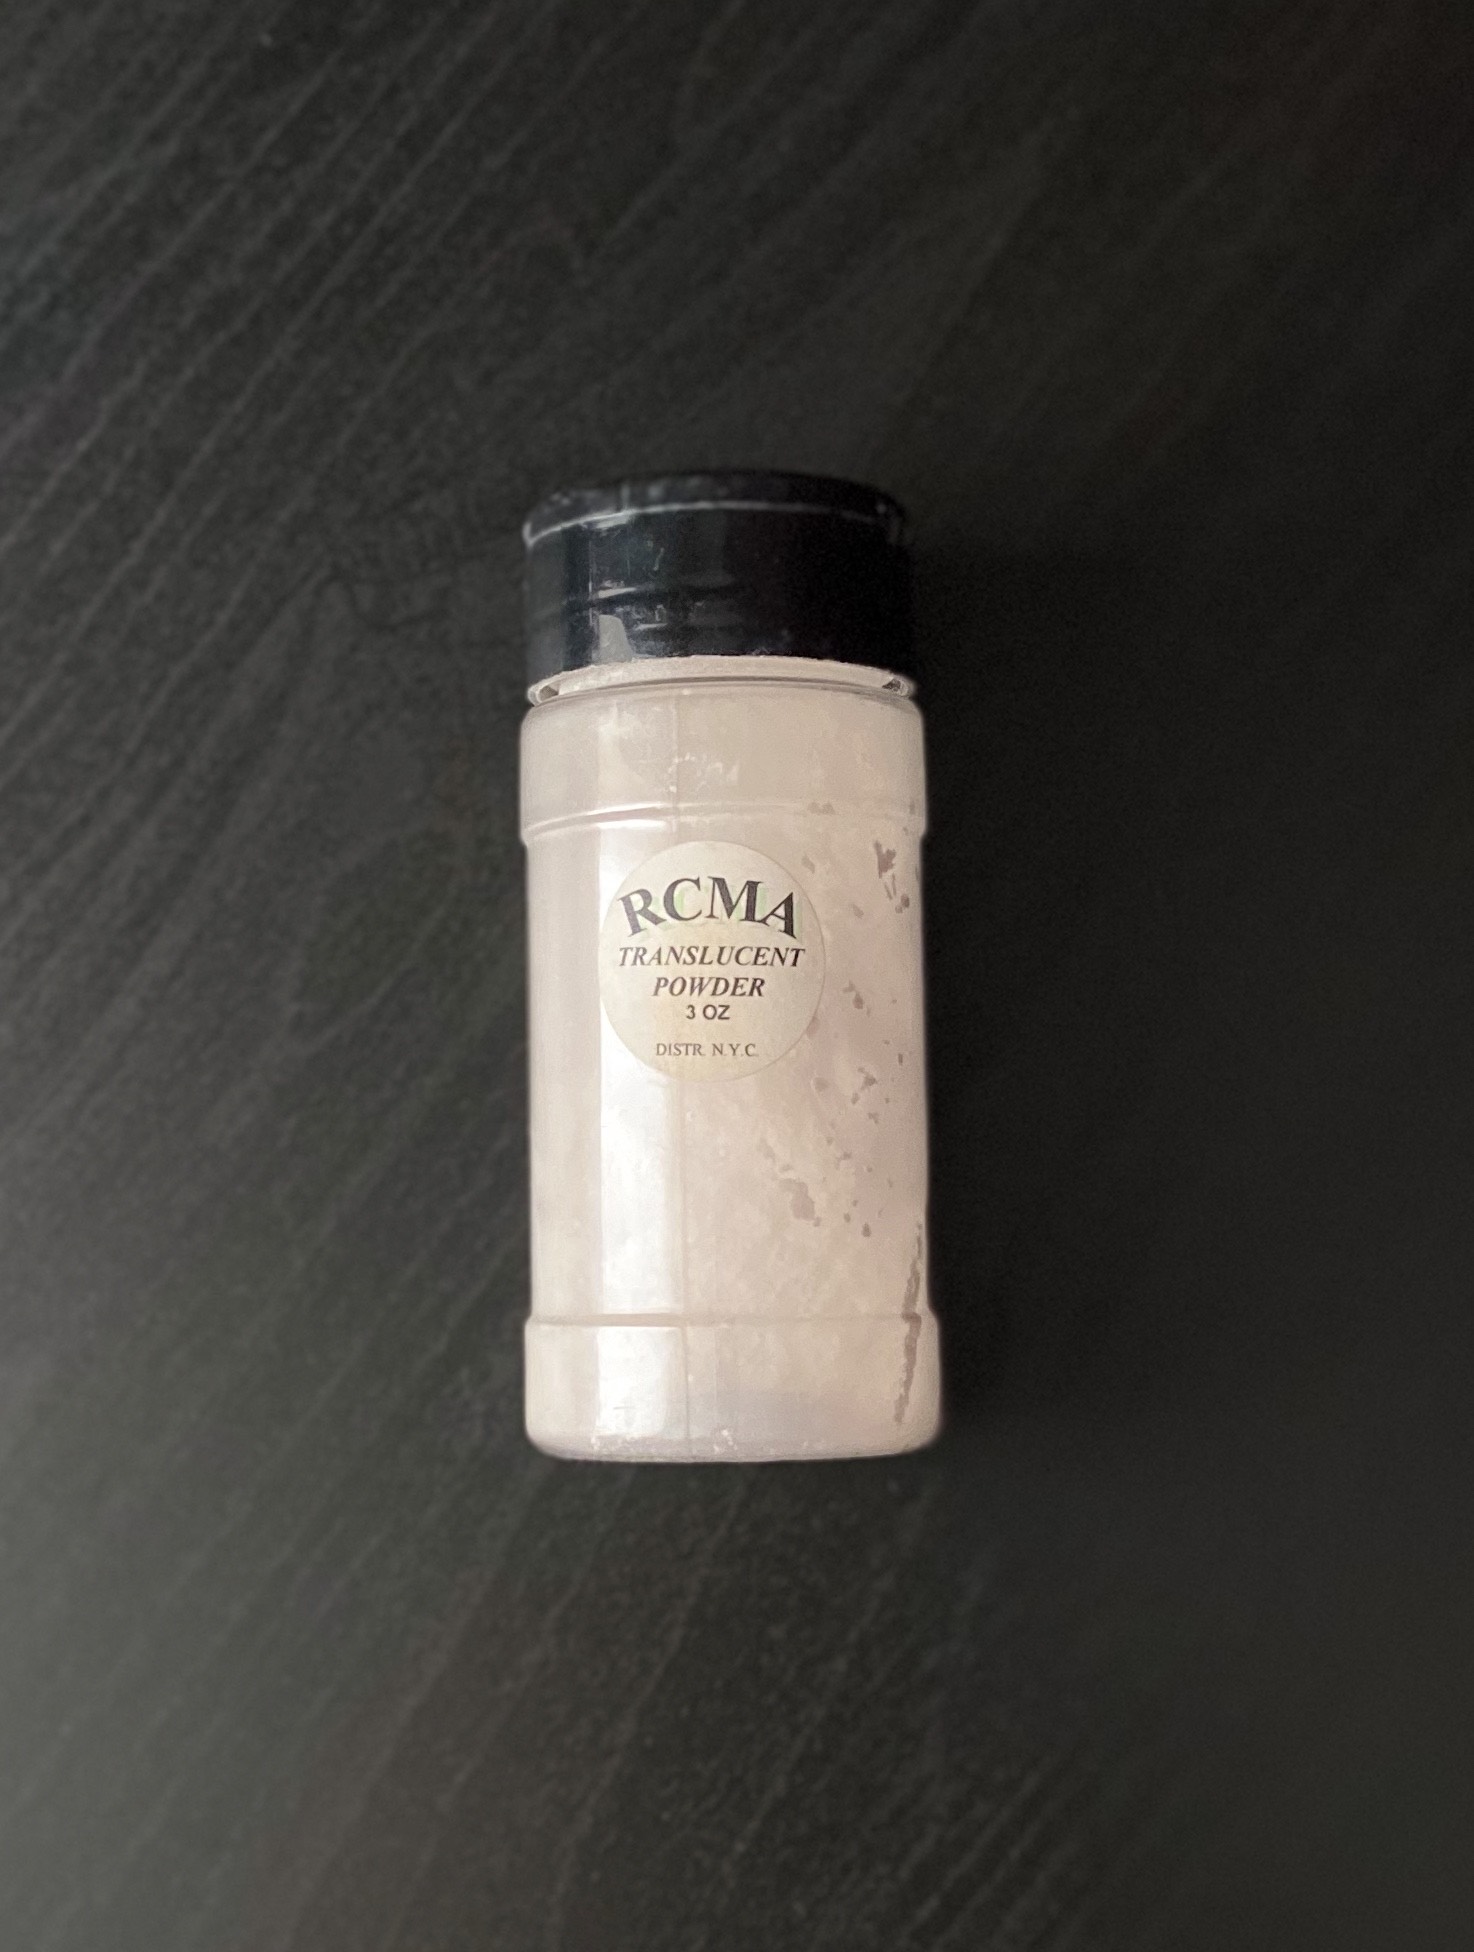 RCMA Translucent Powder – Review – Kayleigh Reviews